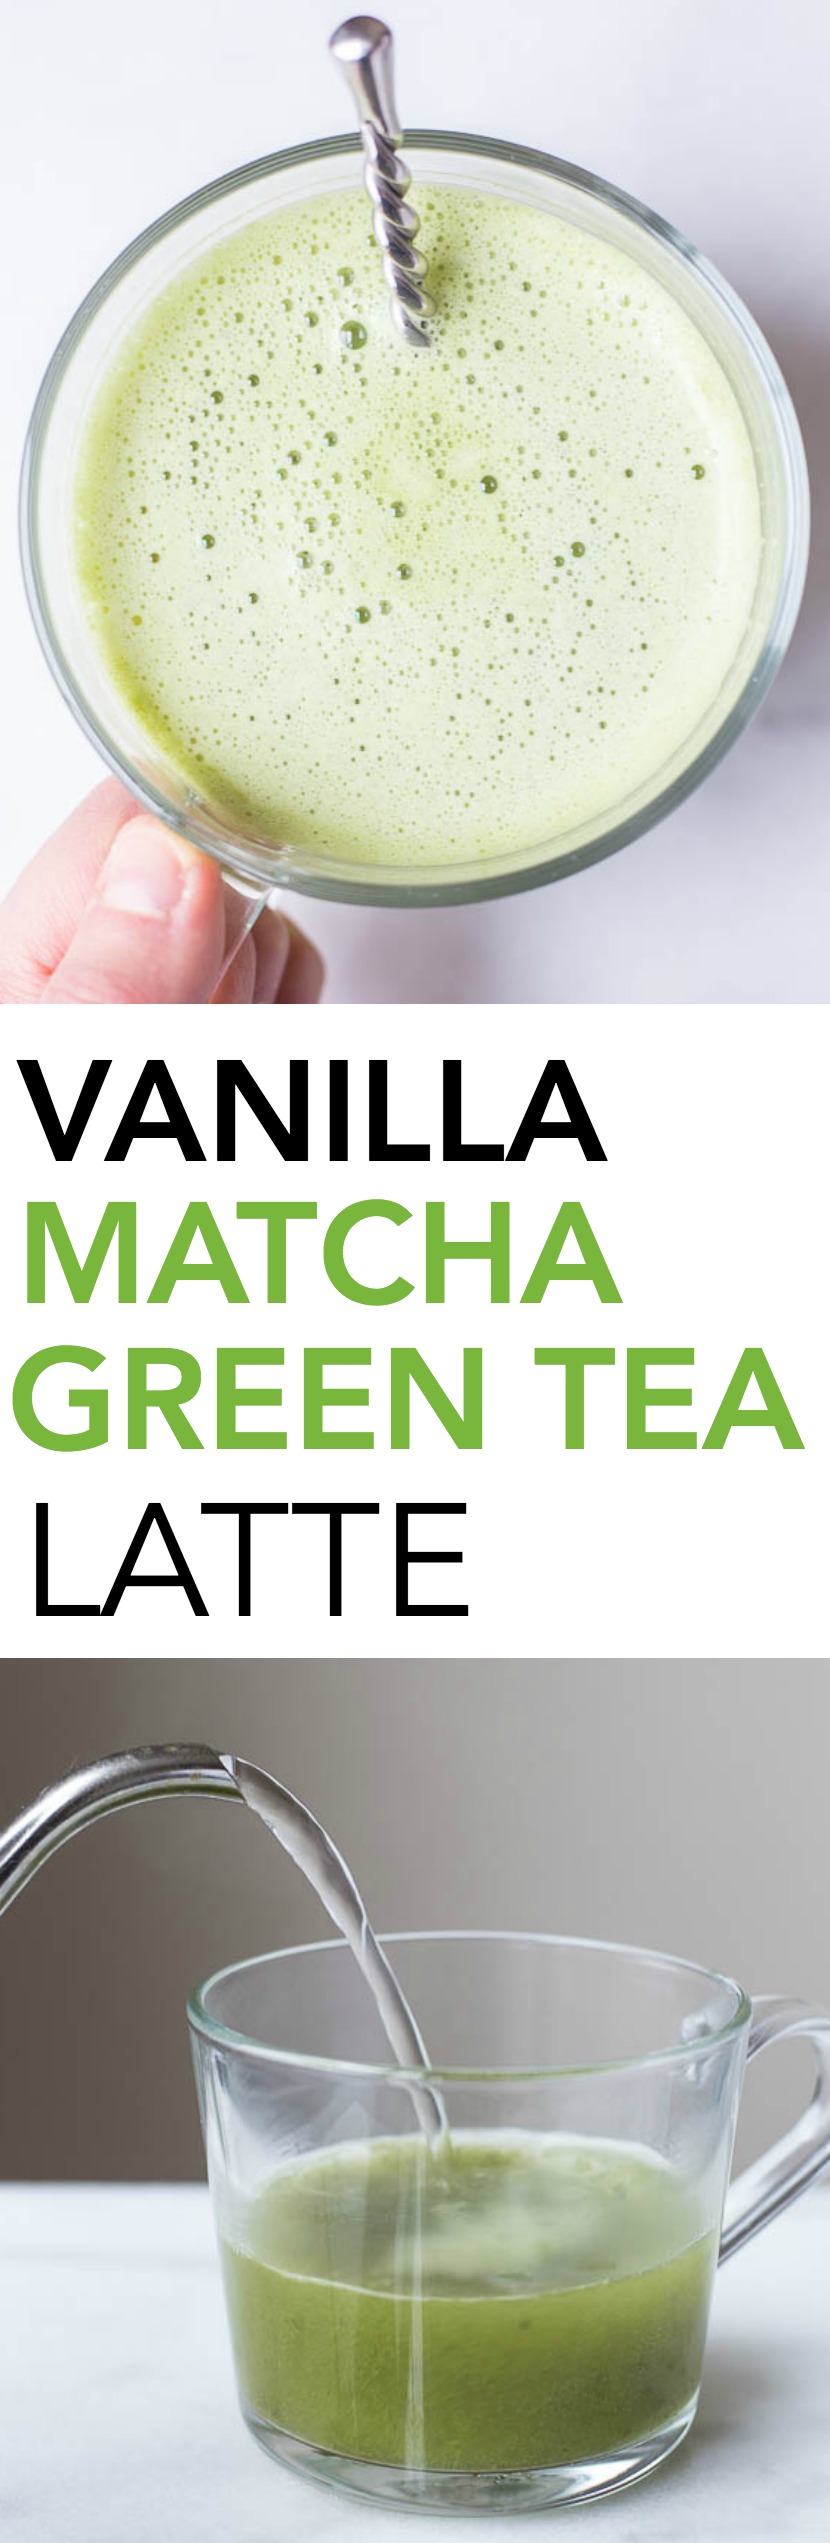 http://www.fooduzzi.com/wp-content/uploads/2016/03/vanilla-matcha-green-tea-latte-pin.jpg